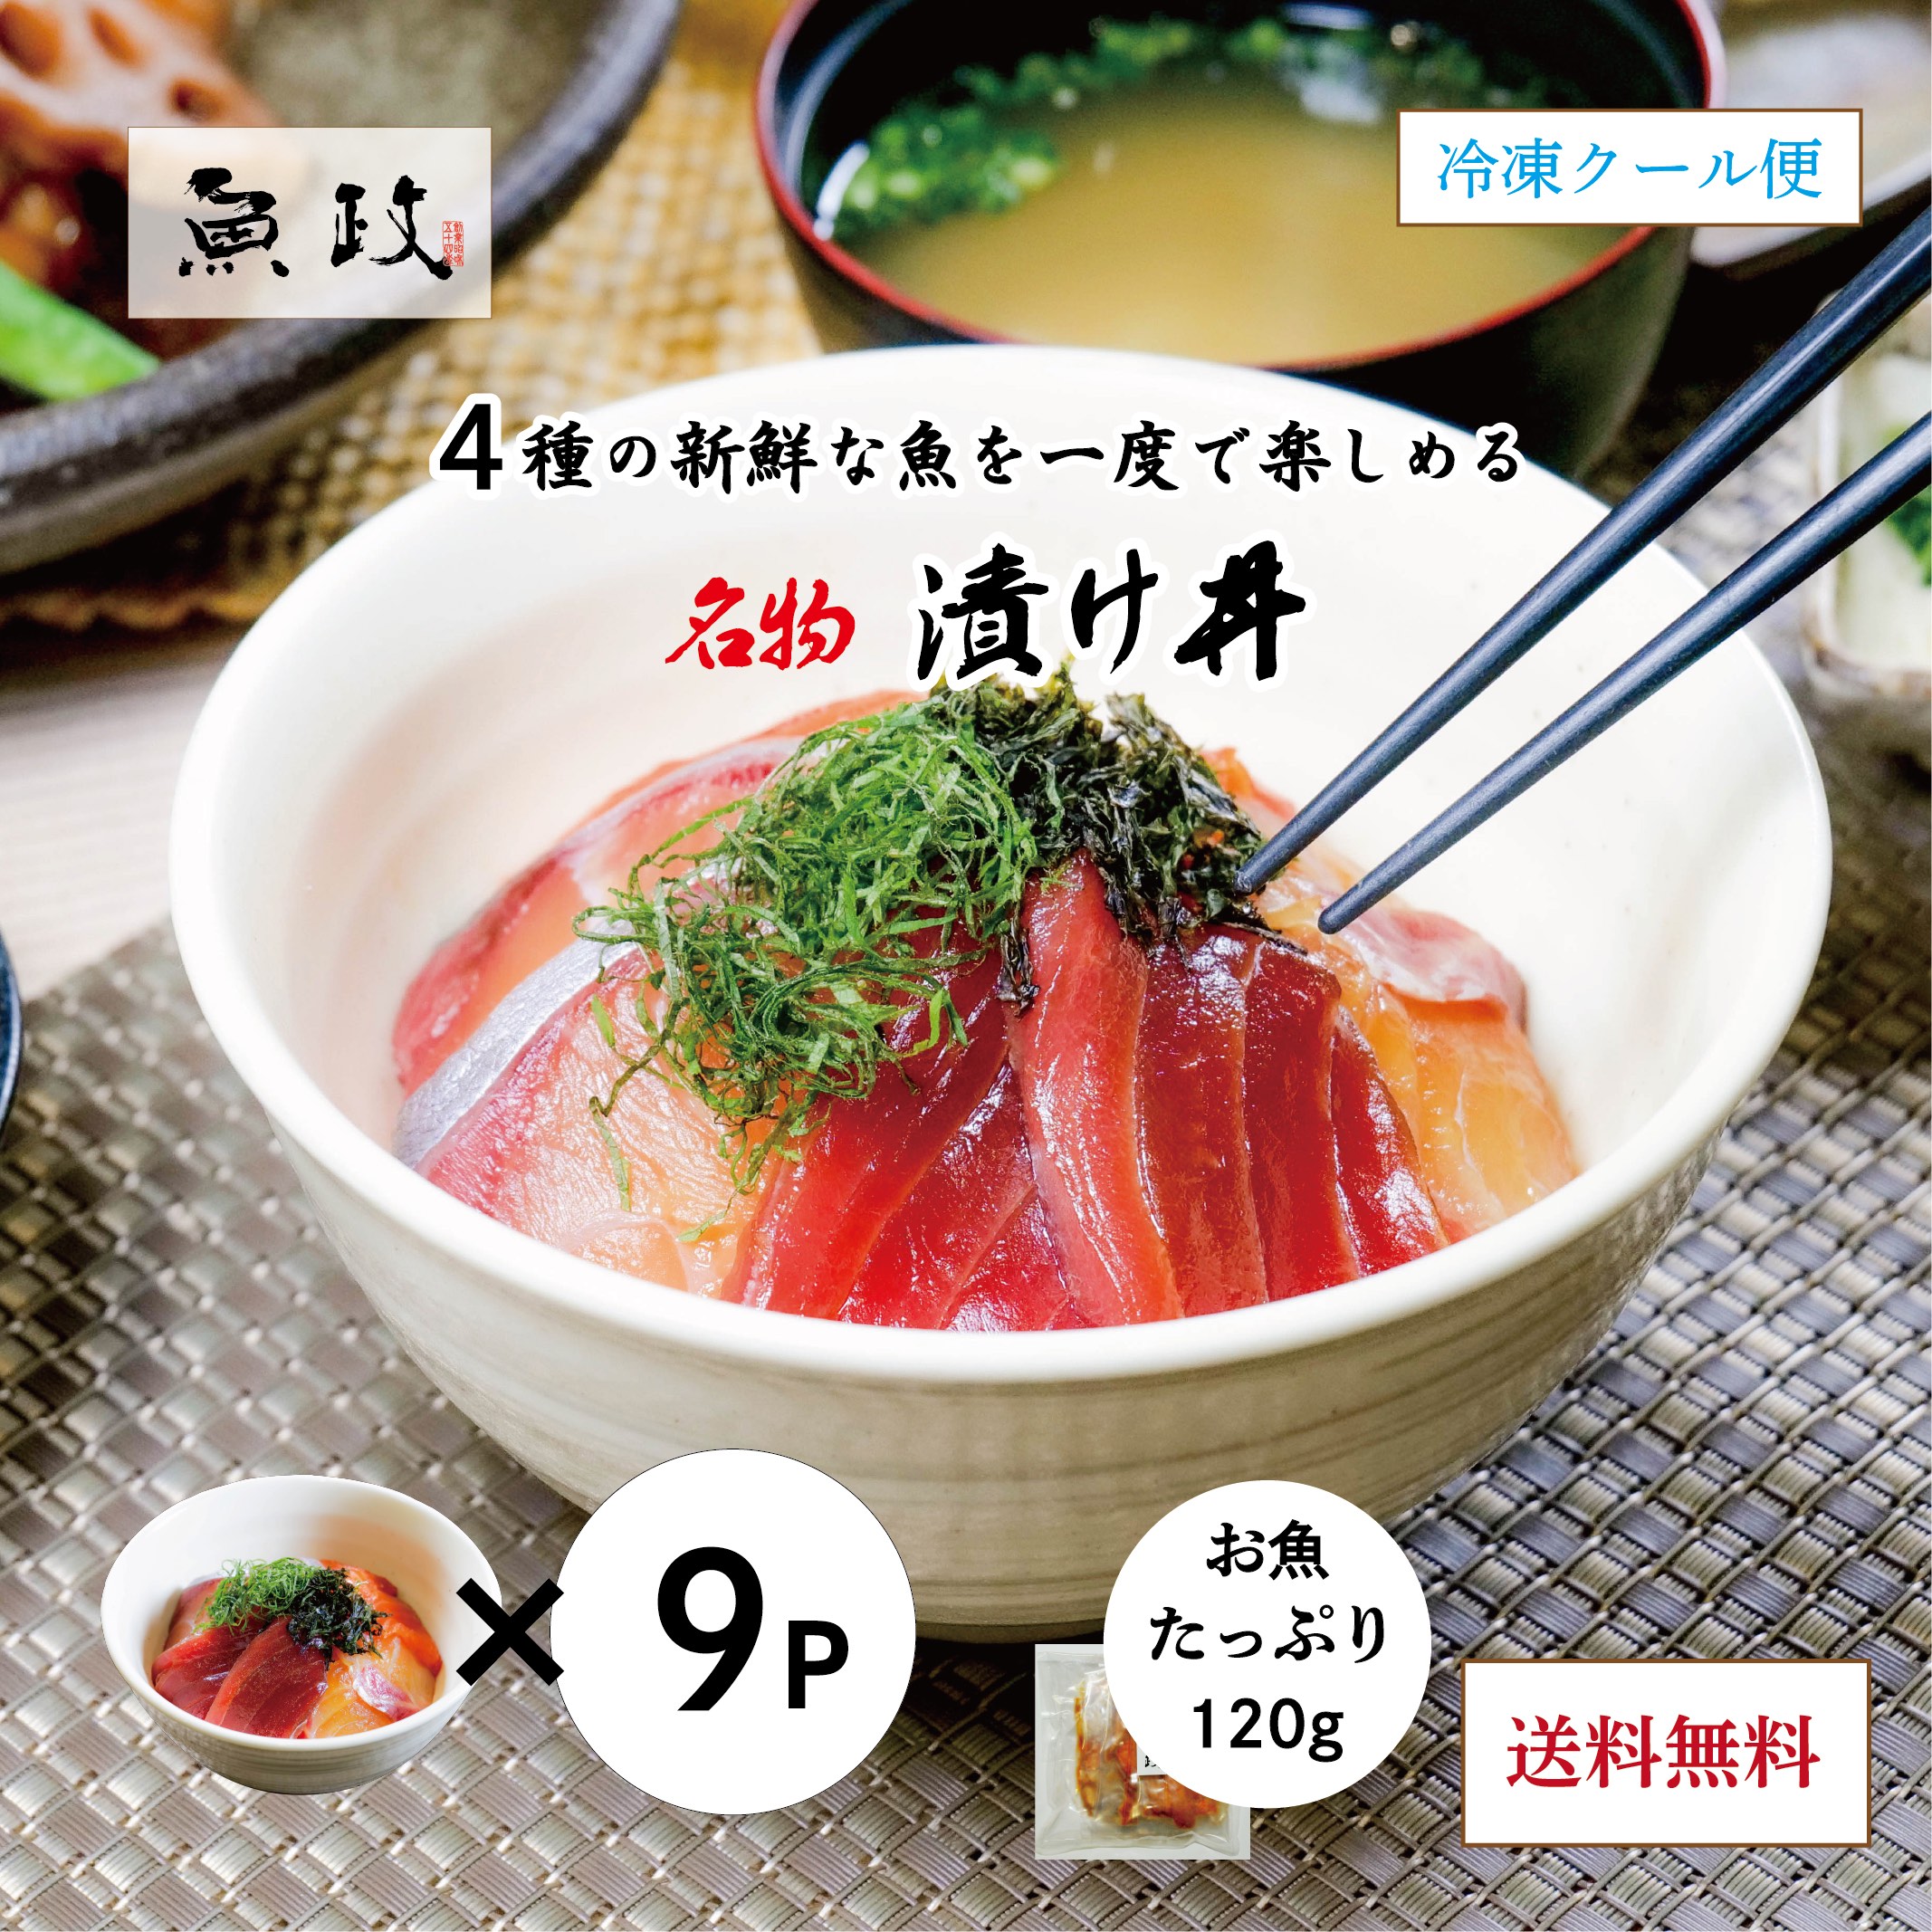 漬け丼 3袋3セット 9P 魚政特製 福岡 久留米 海鮮丼 